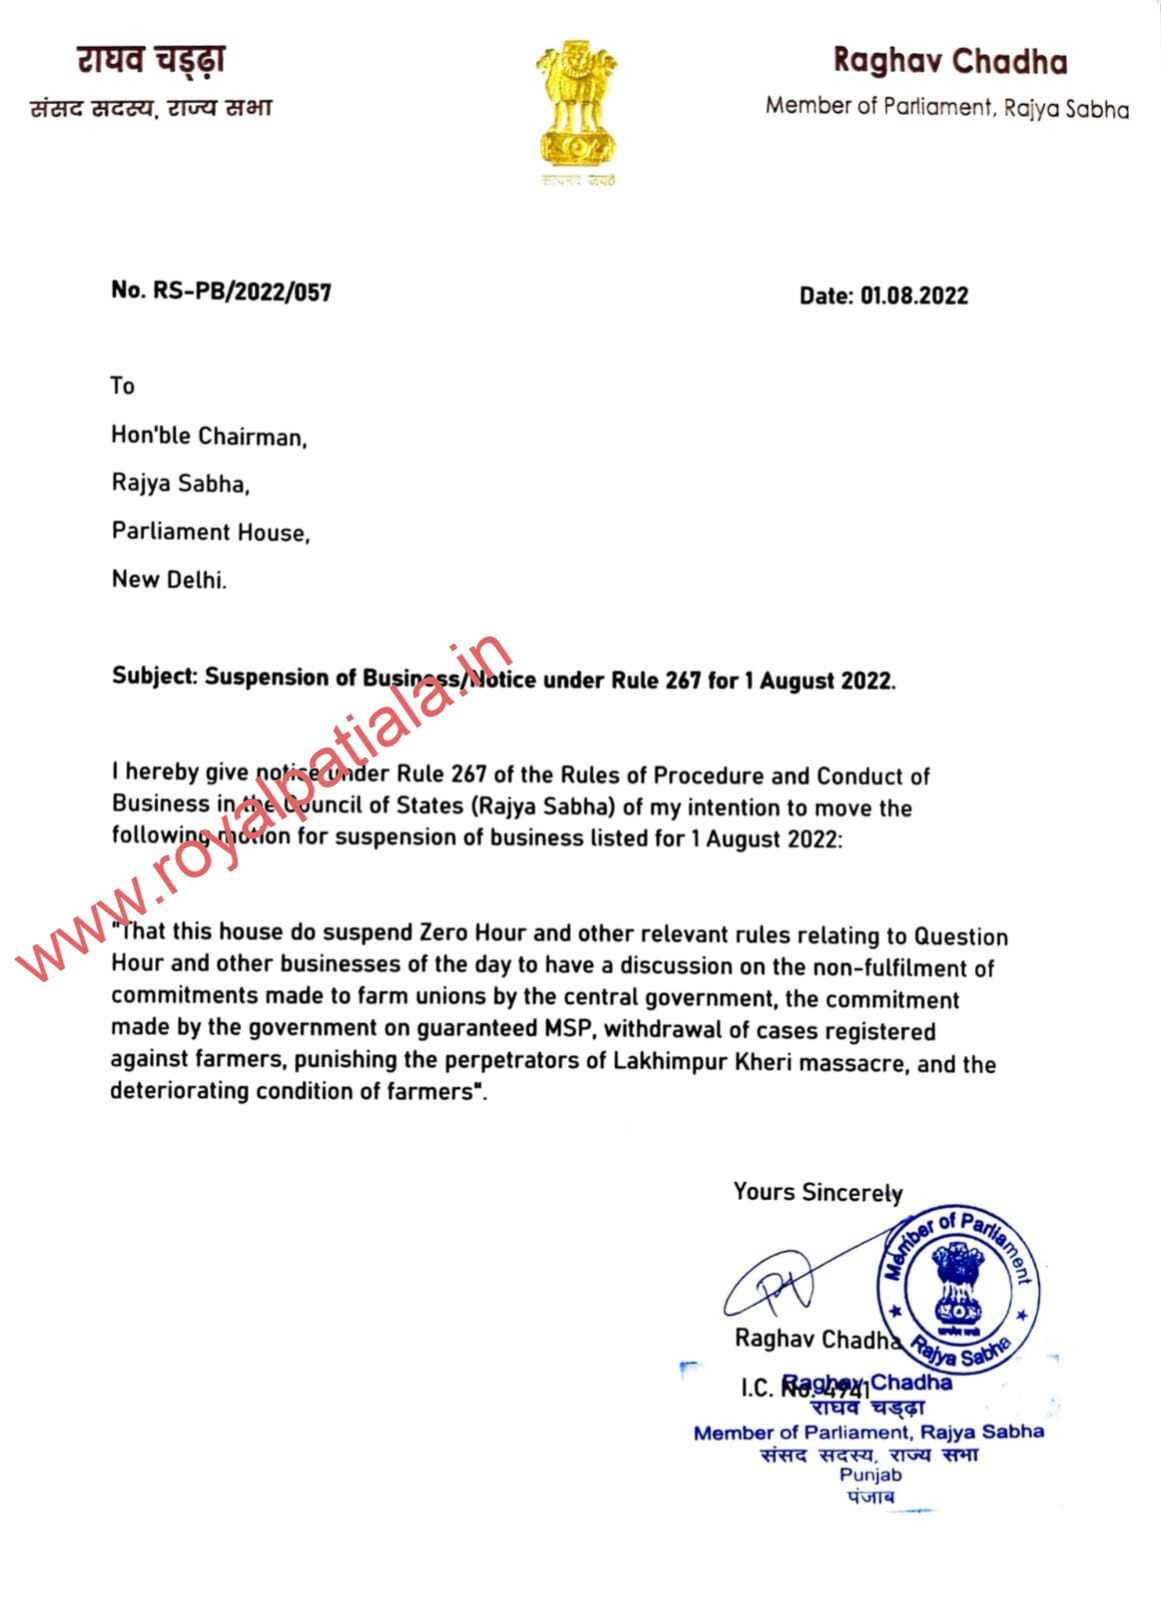 Raghav Chadha gave Suspension of Business/ Notice to Chairman, Rajya Sabha